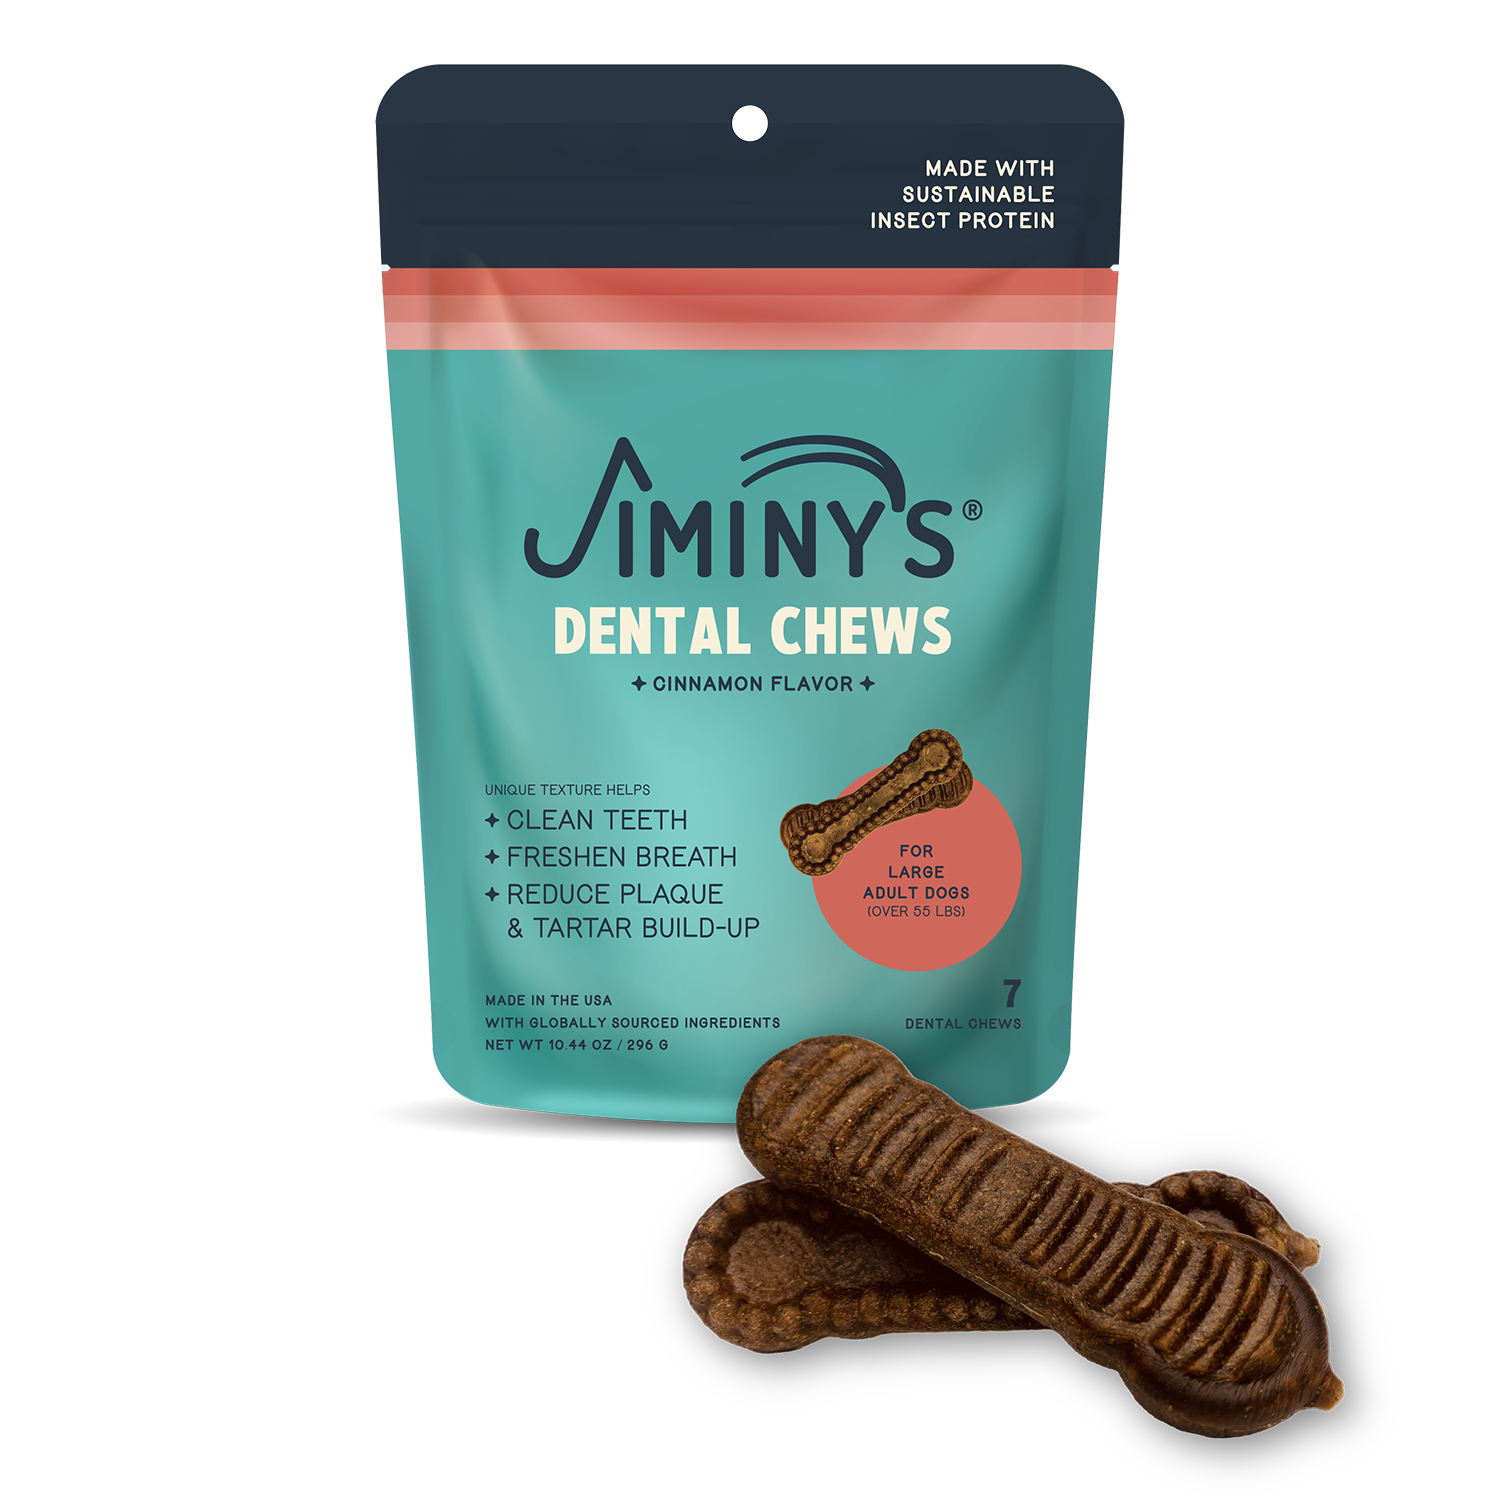 Jiminy's Dog Dental Large Size 7ct cinnamon flavor front